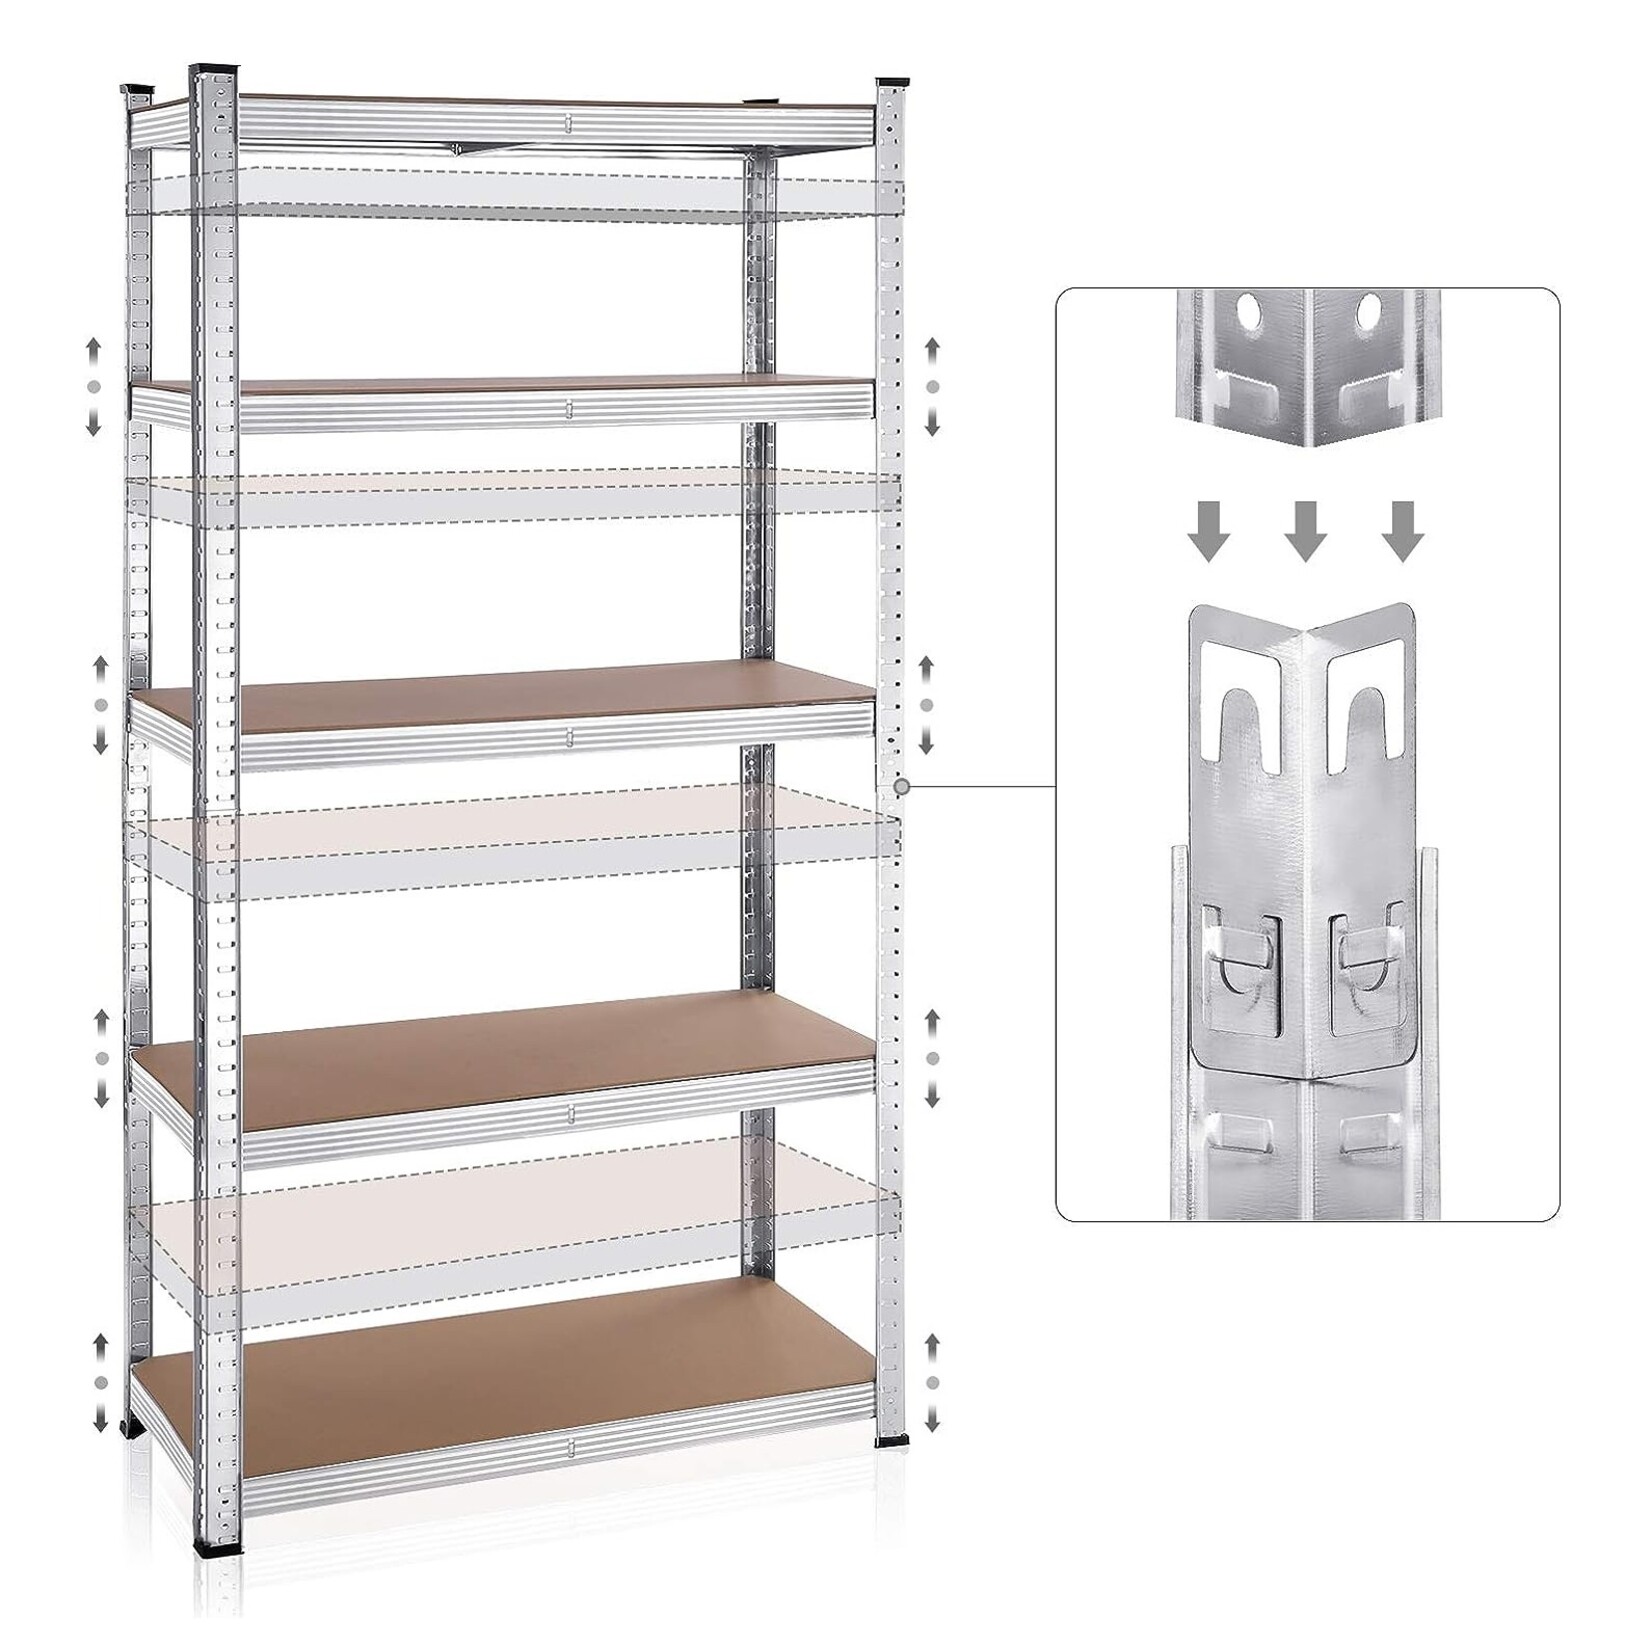 Bobbel Home Bobbel Home - Shelving cabinets - Heavy duty shelving - Set of 2 - Silver